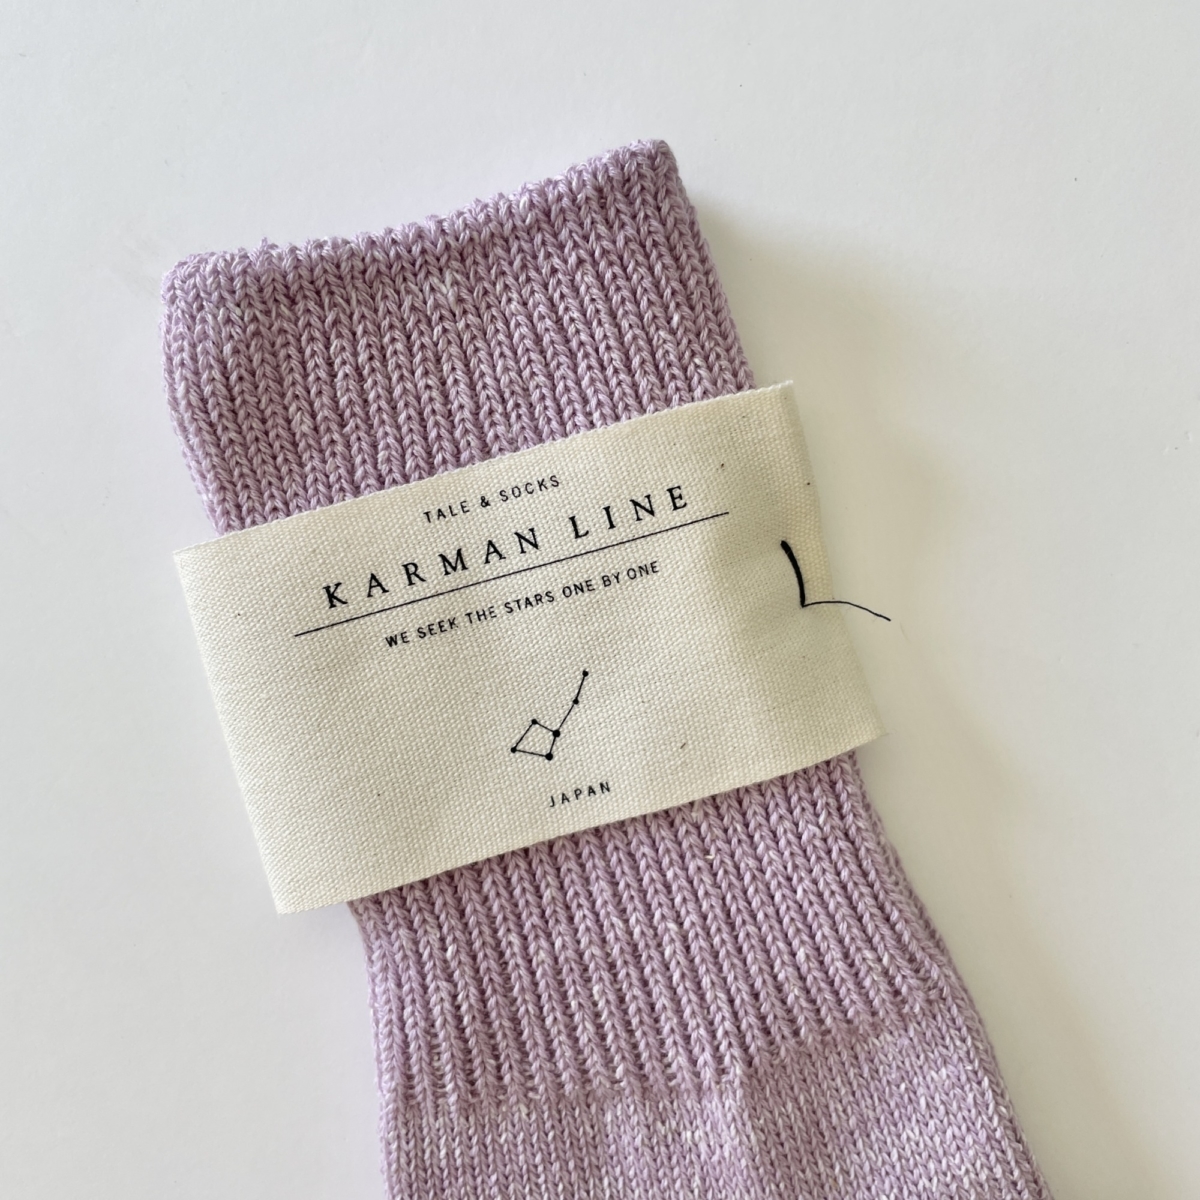 KARMAN LINE NORMA / Socks / Lilac / 23-25cm